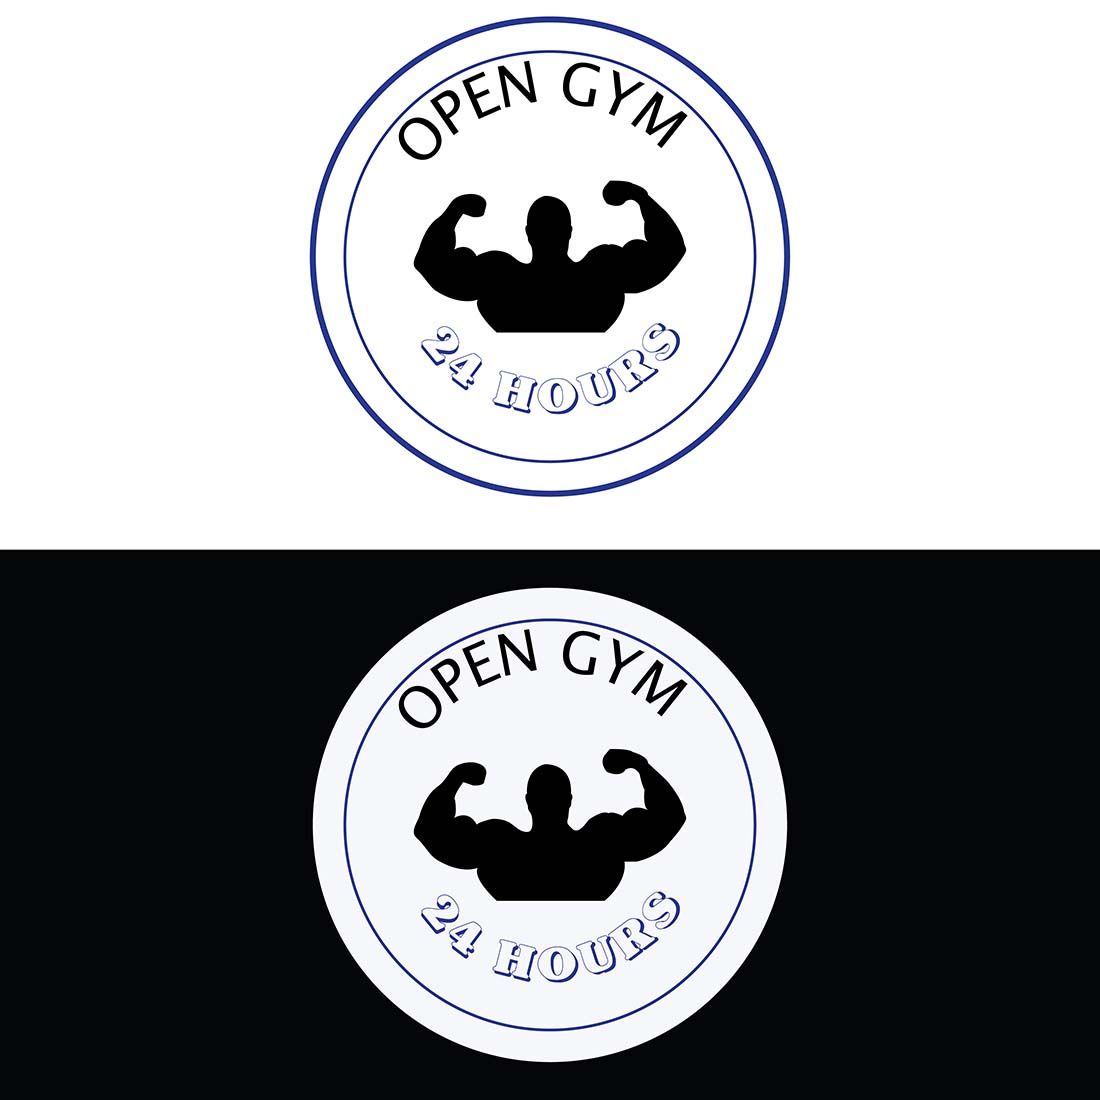 open gym logo preview image.